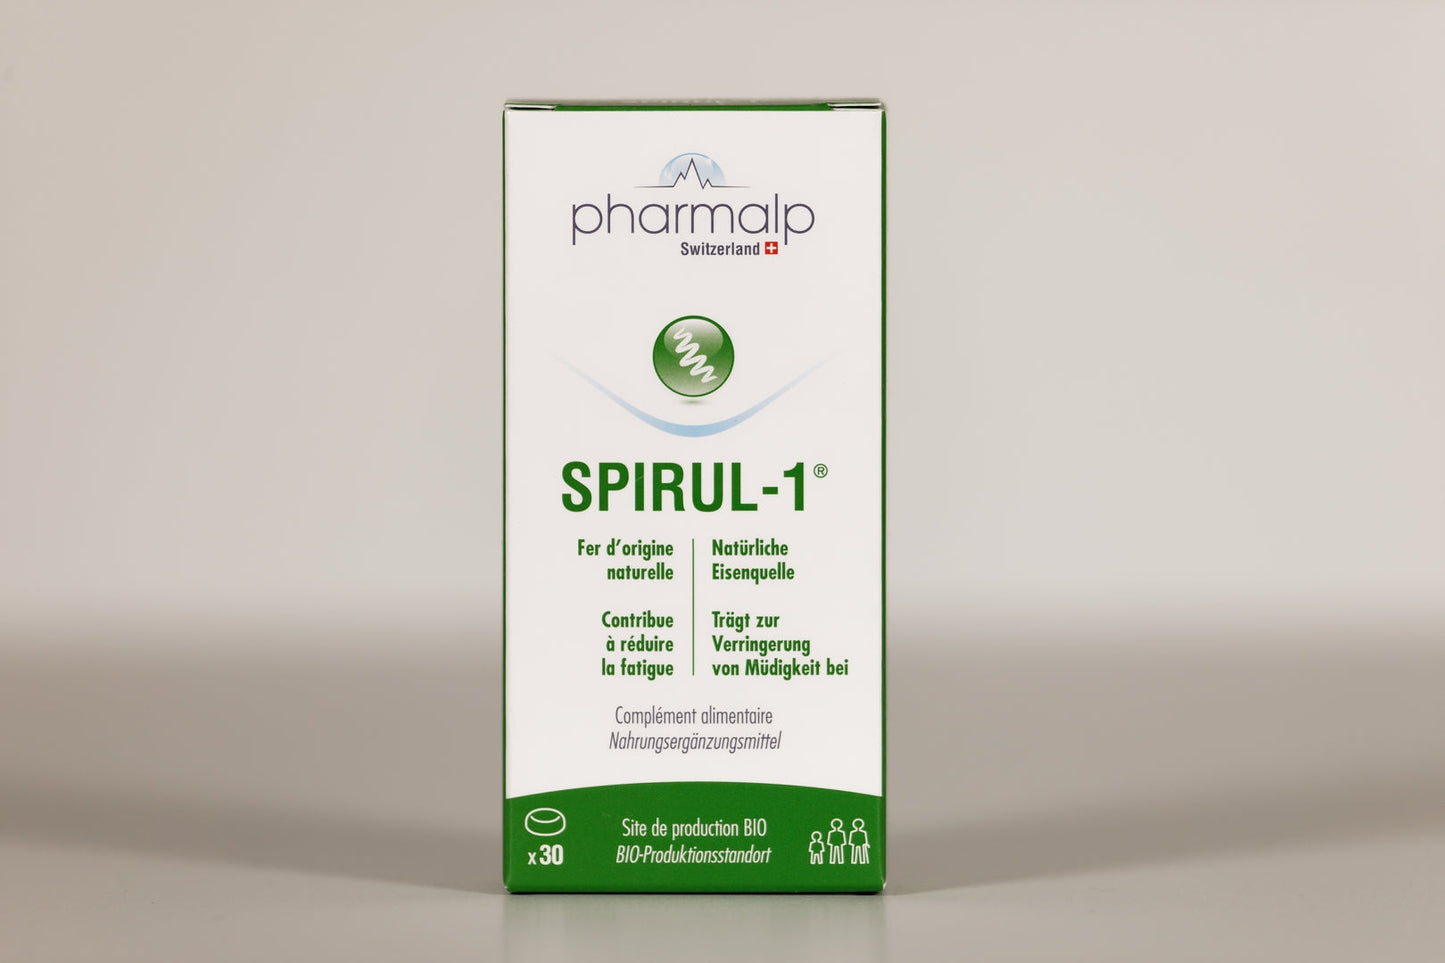 SPIRULina-1 30 tab. (Natural iron, anti-fatigue)